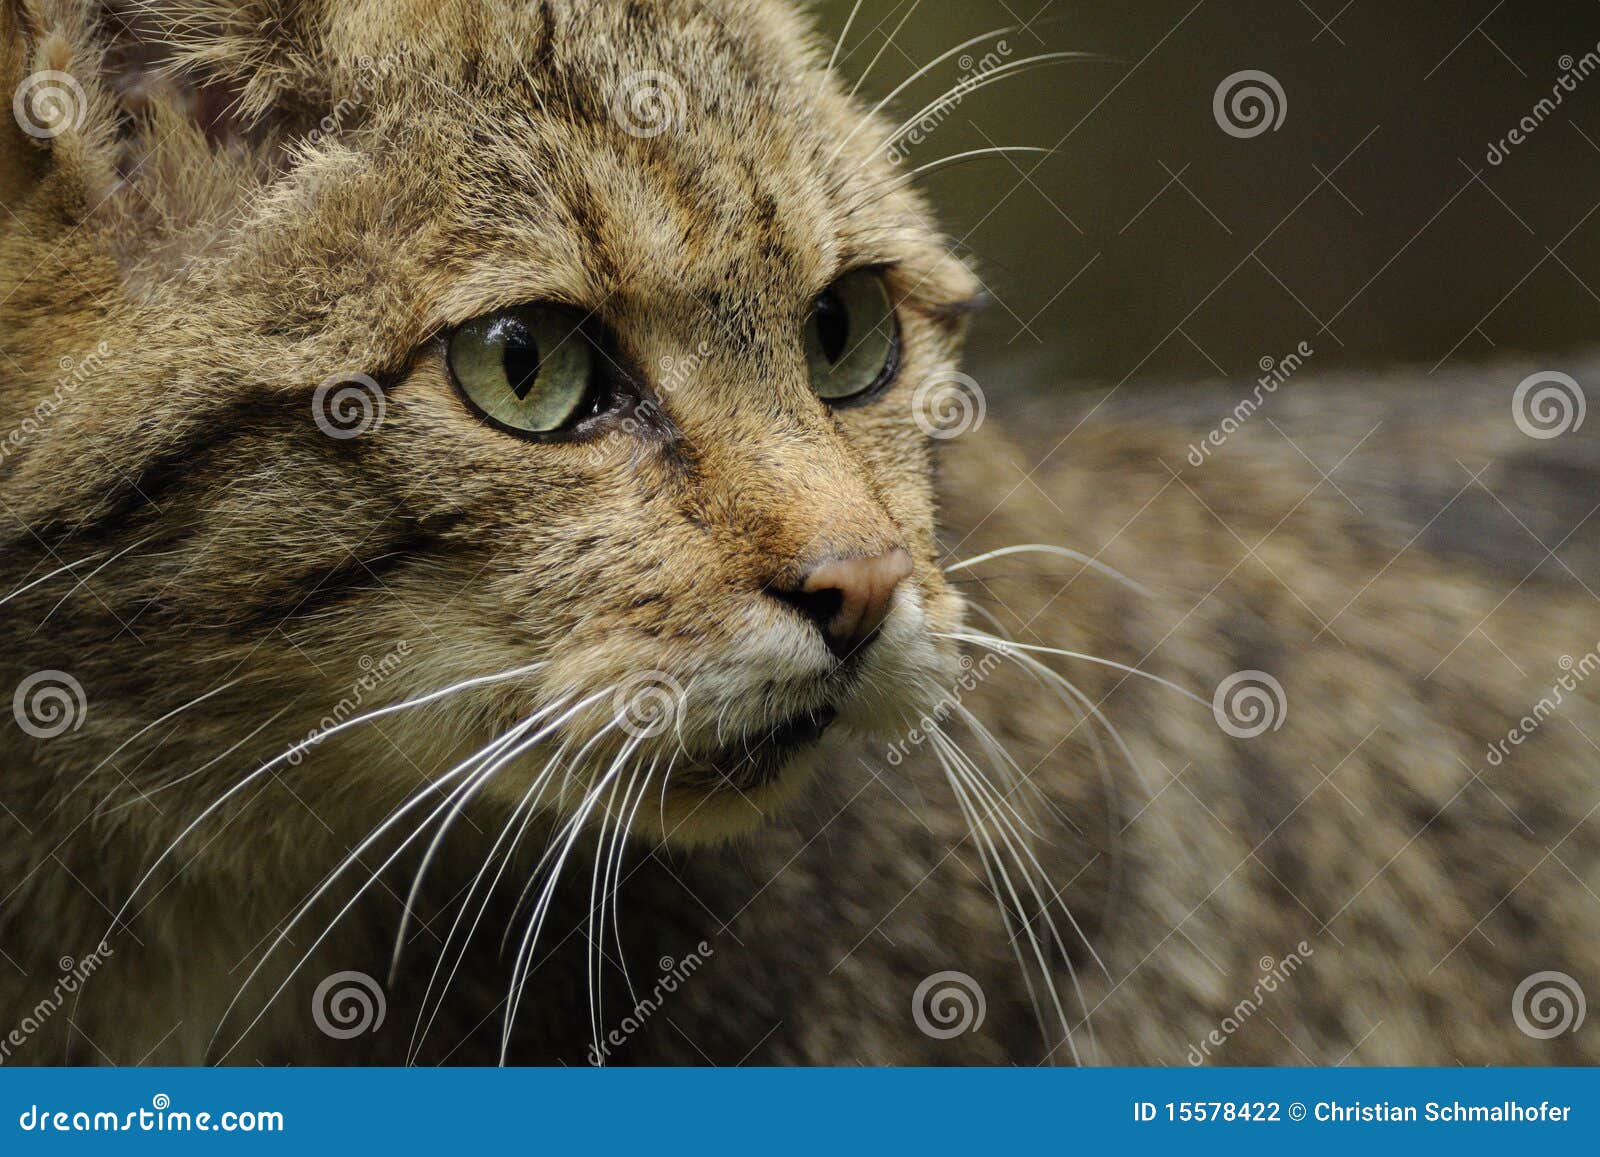 wildcat (felis silvestris)